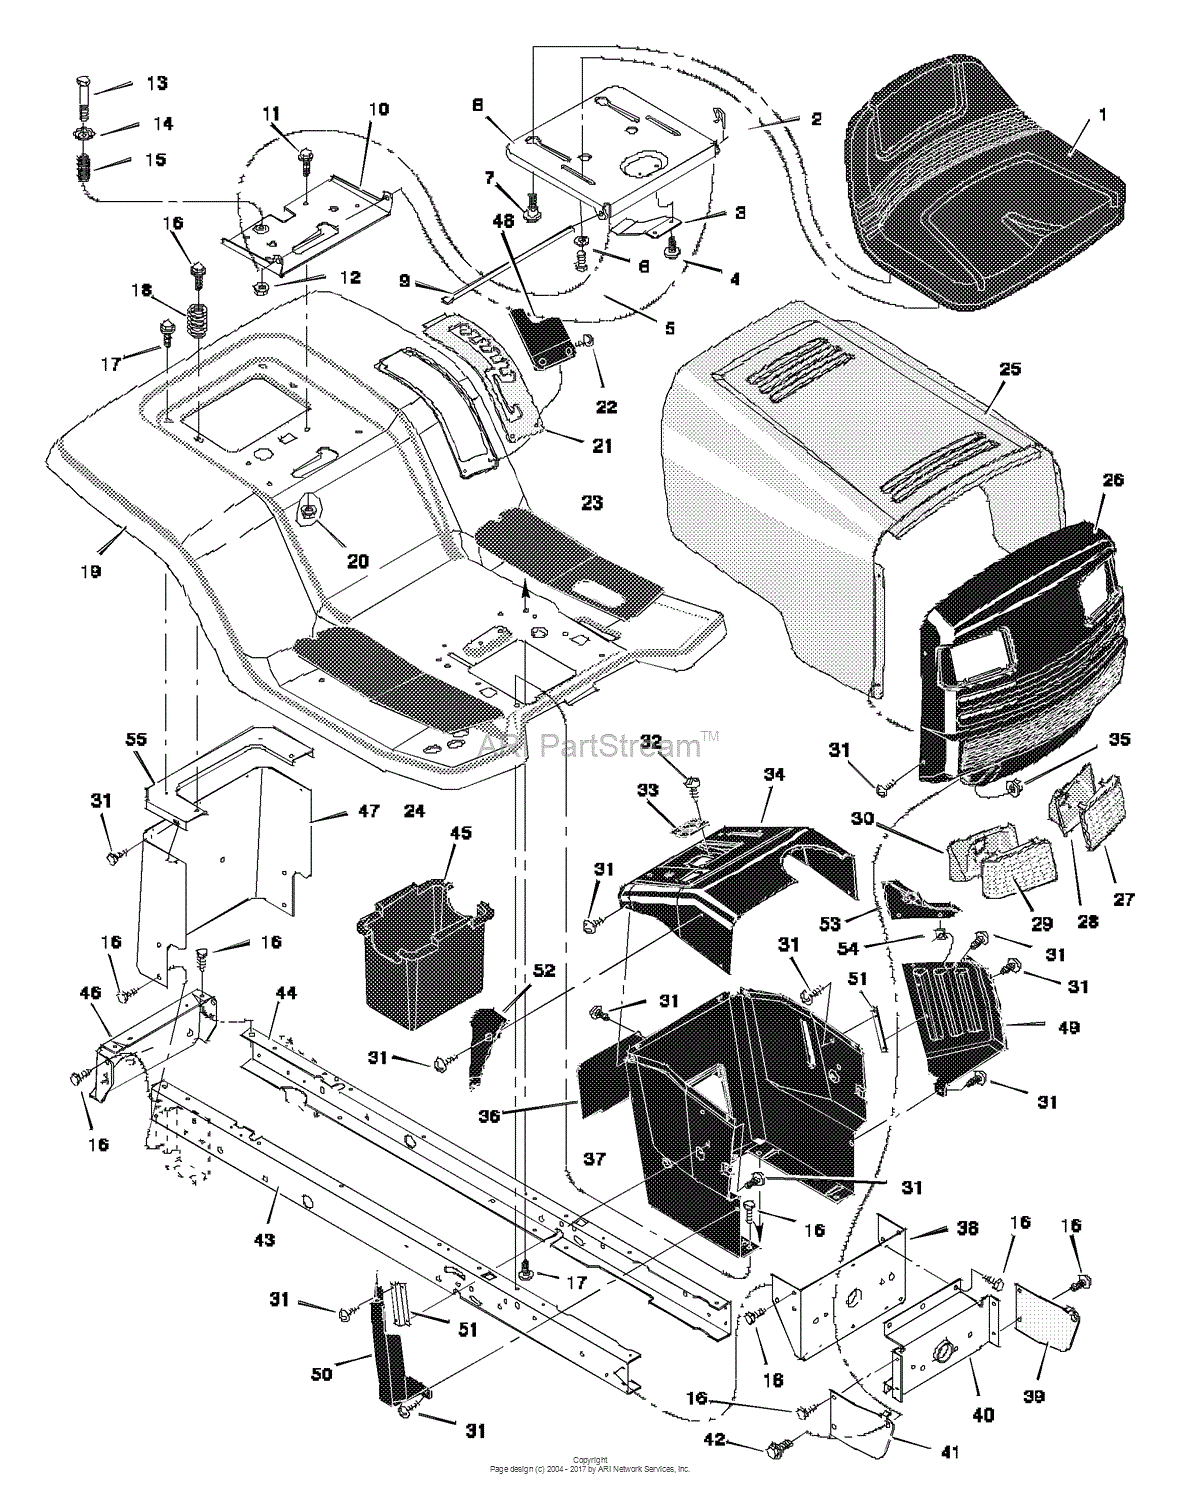 Murray 46560x92A - Lawn Tractor (1997) Parts Diagrams